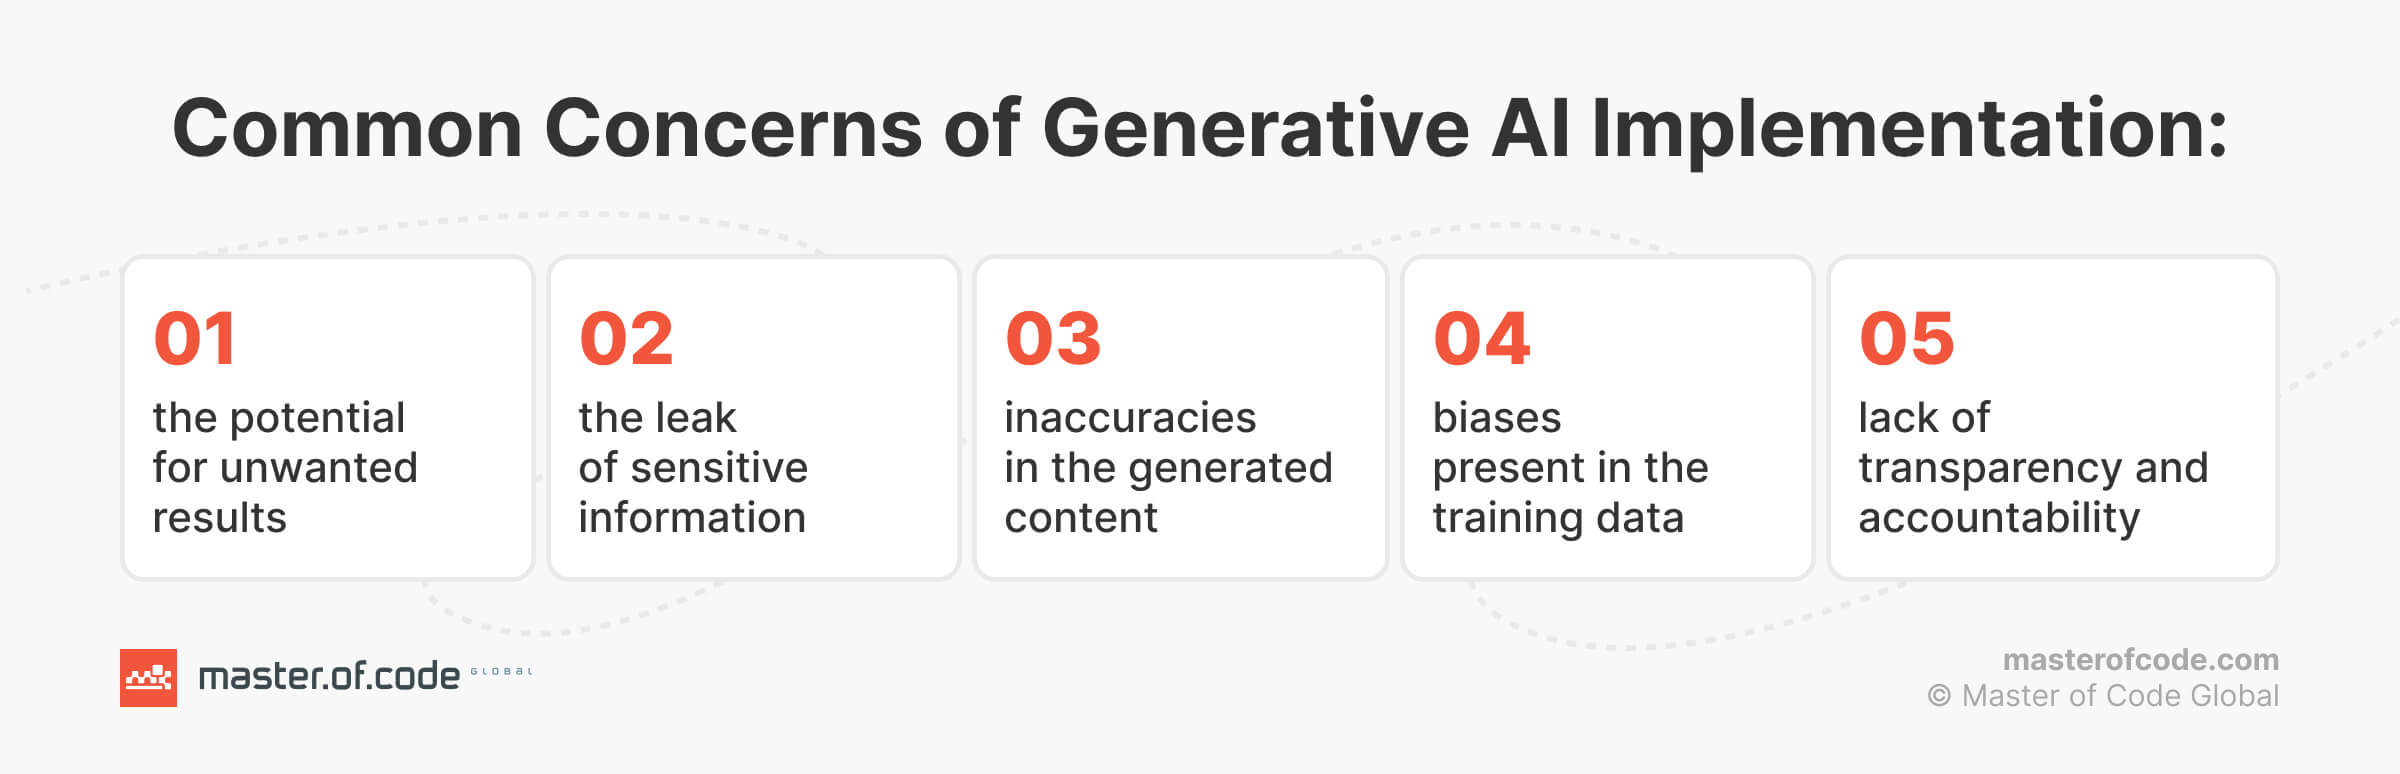 5 Concerns Of Gen AI Implementation